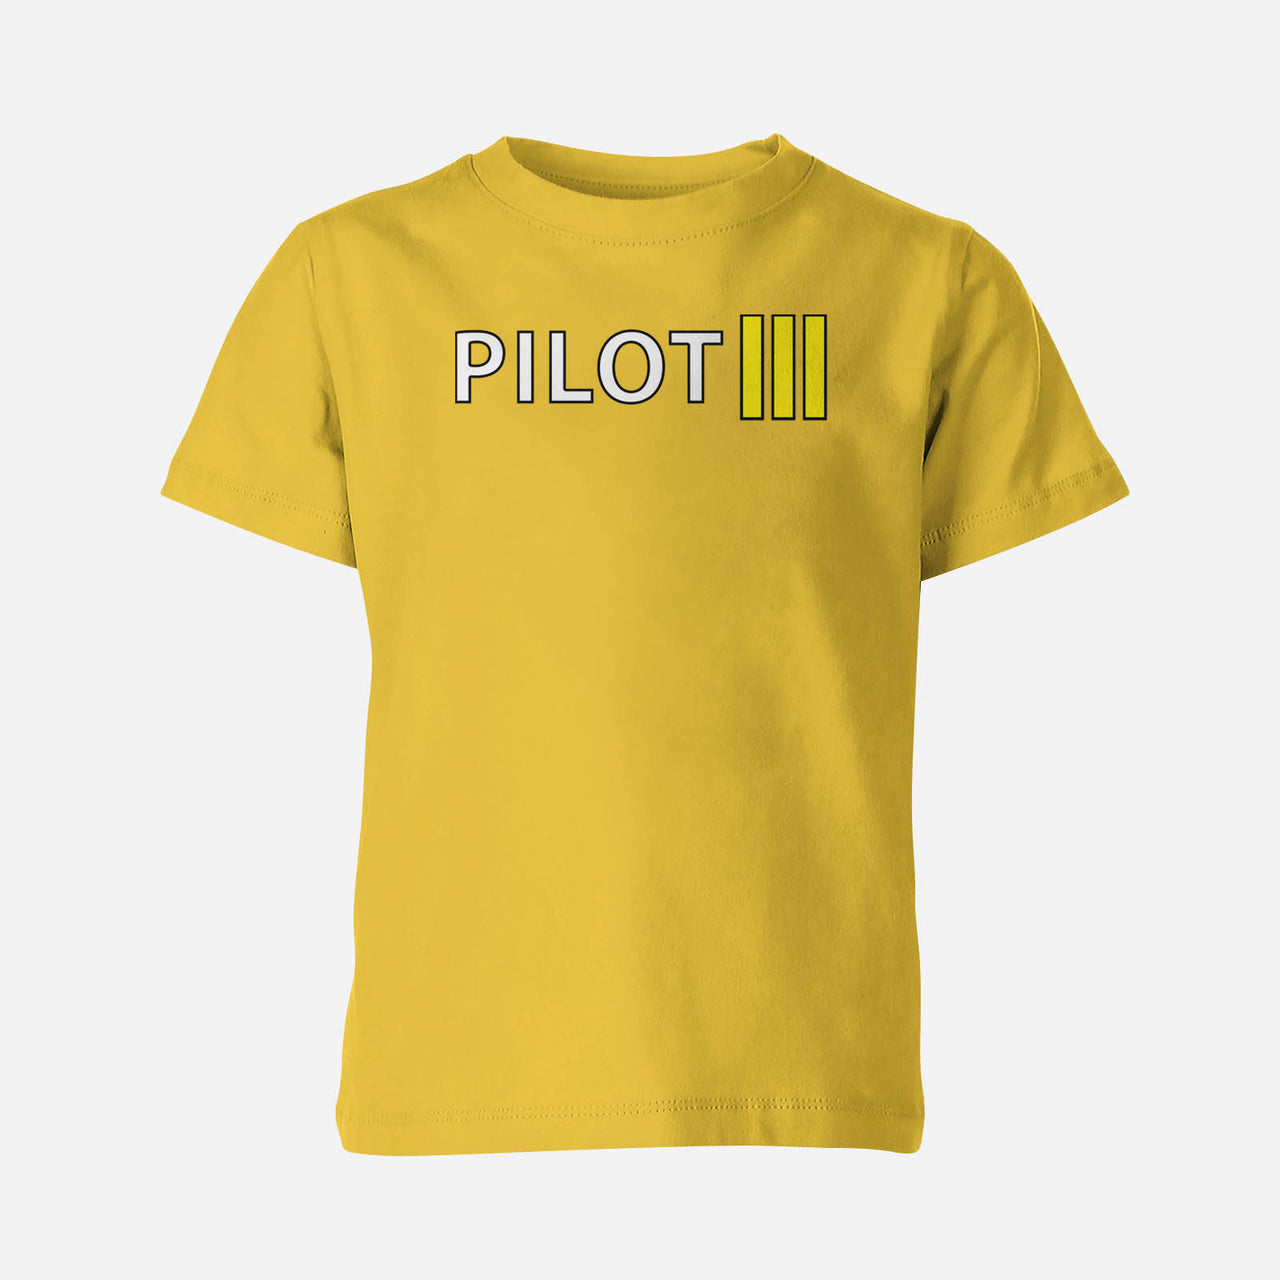 Pilot & Stripes (3 Lines) Designed Children T-Shirts